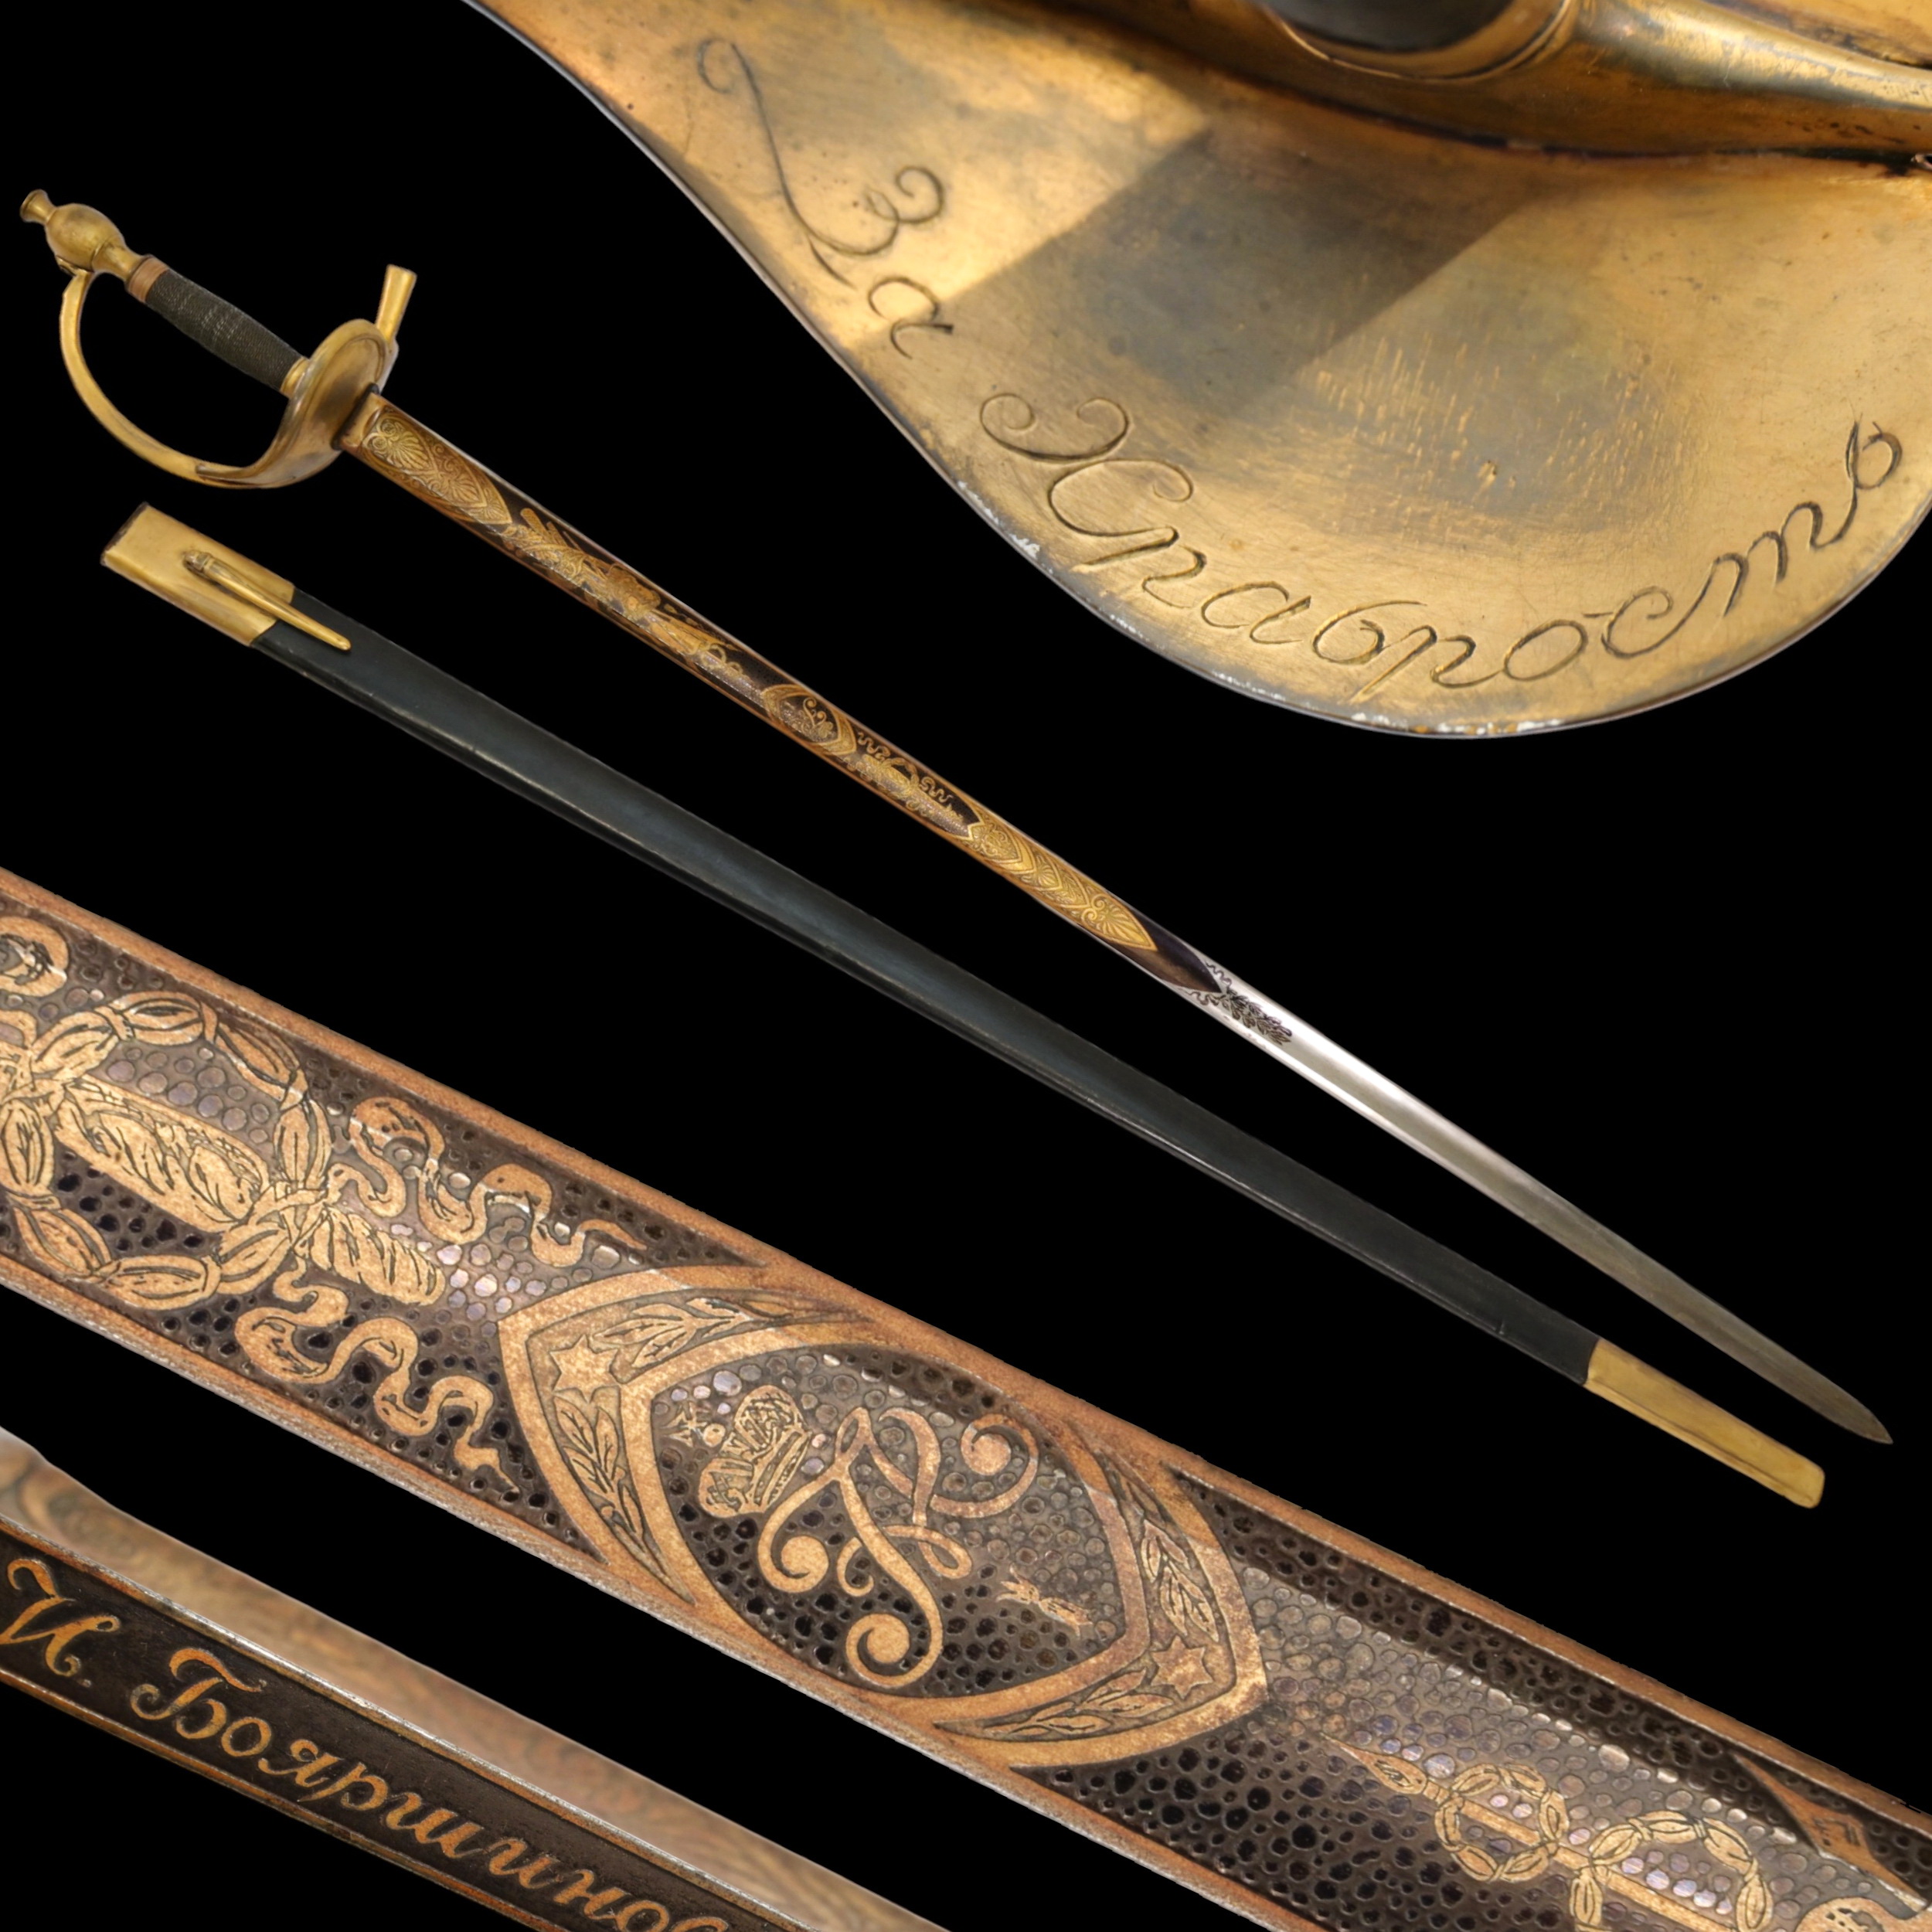 Russian sword, "For bravery" signature on the blade "I Boyarshinov, Zatoust, 1831".